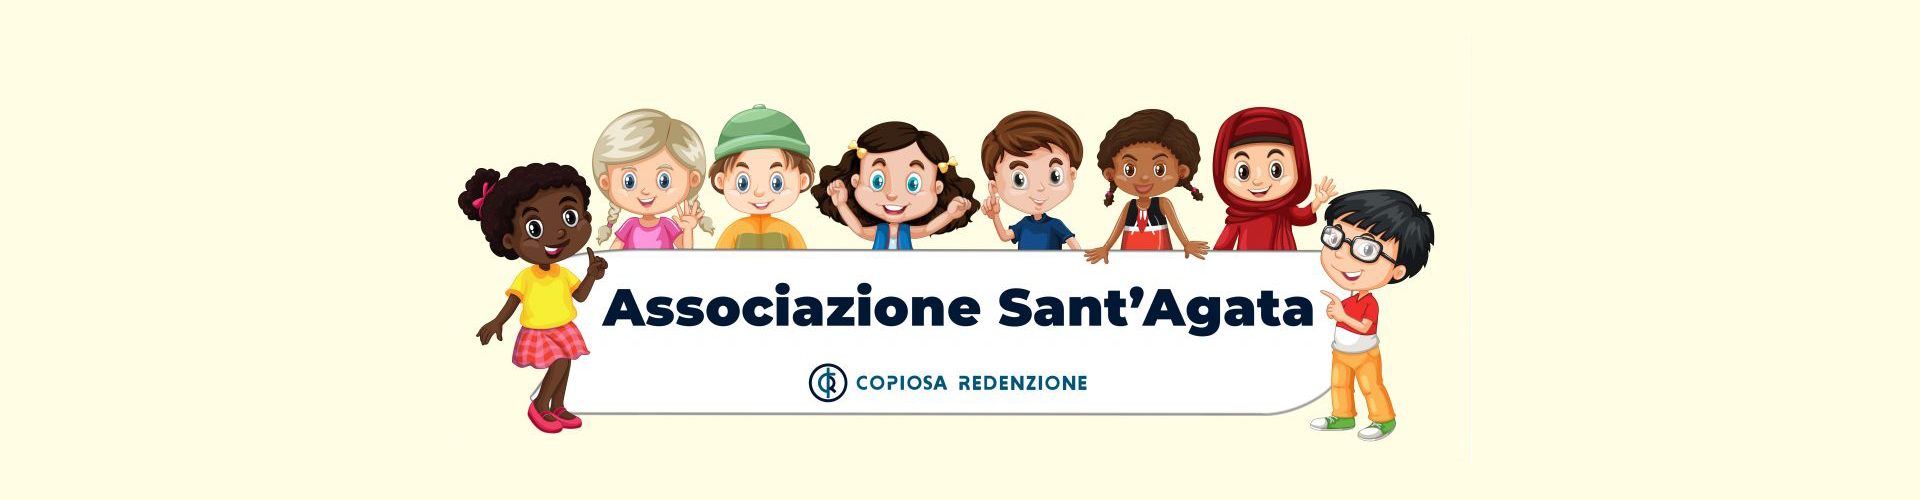 Associazione Sant'Agata